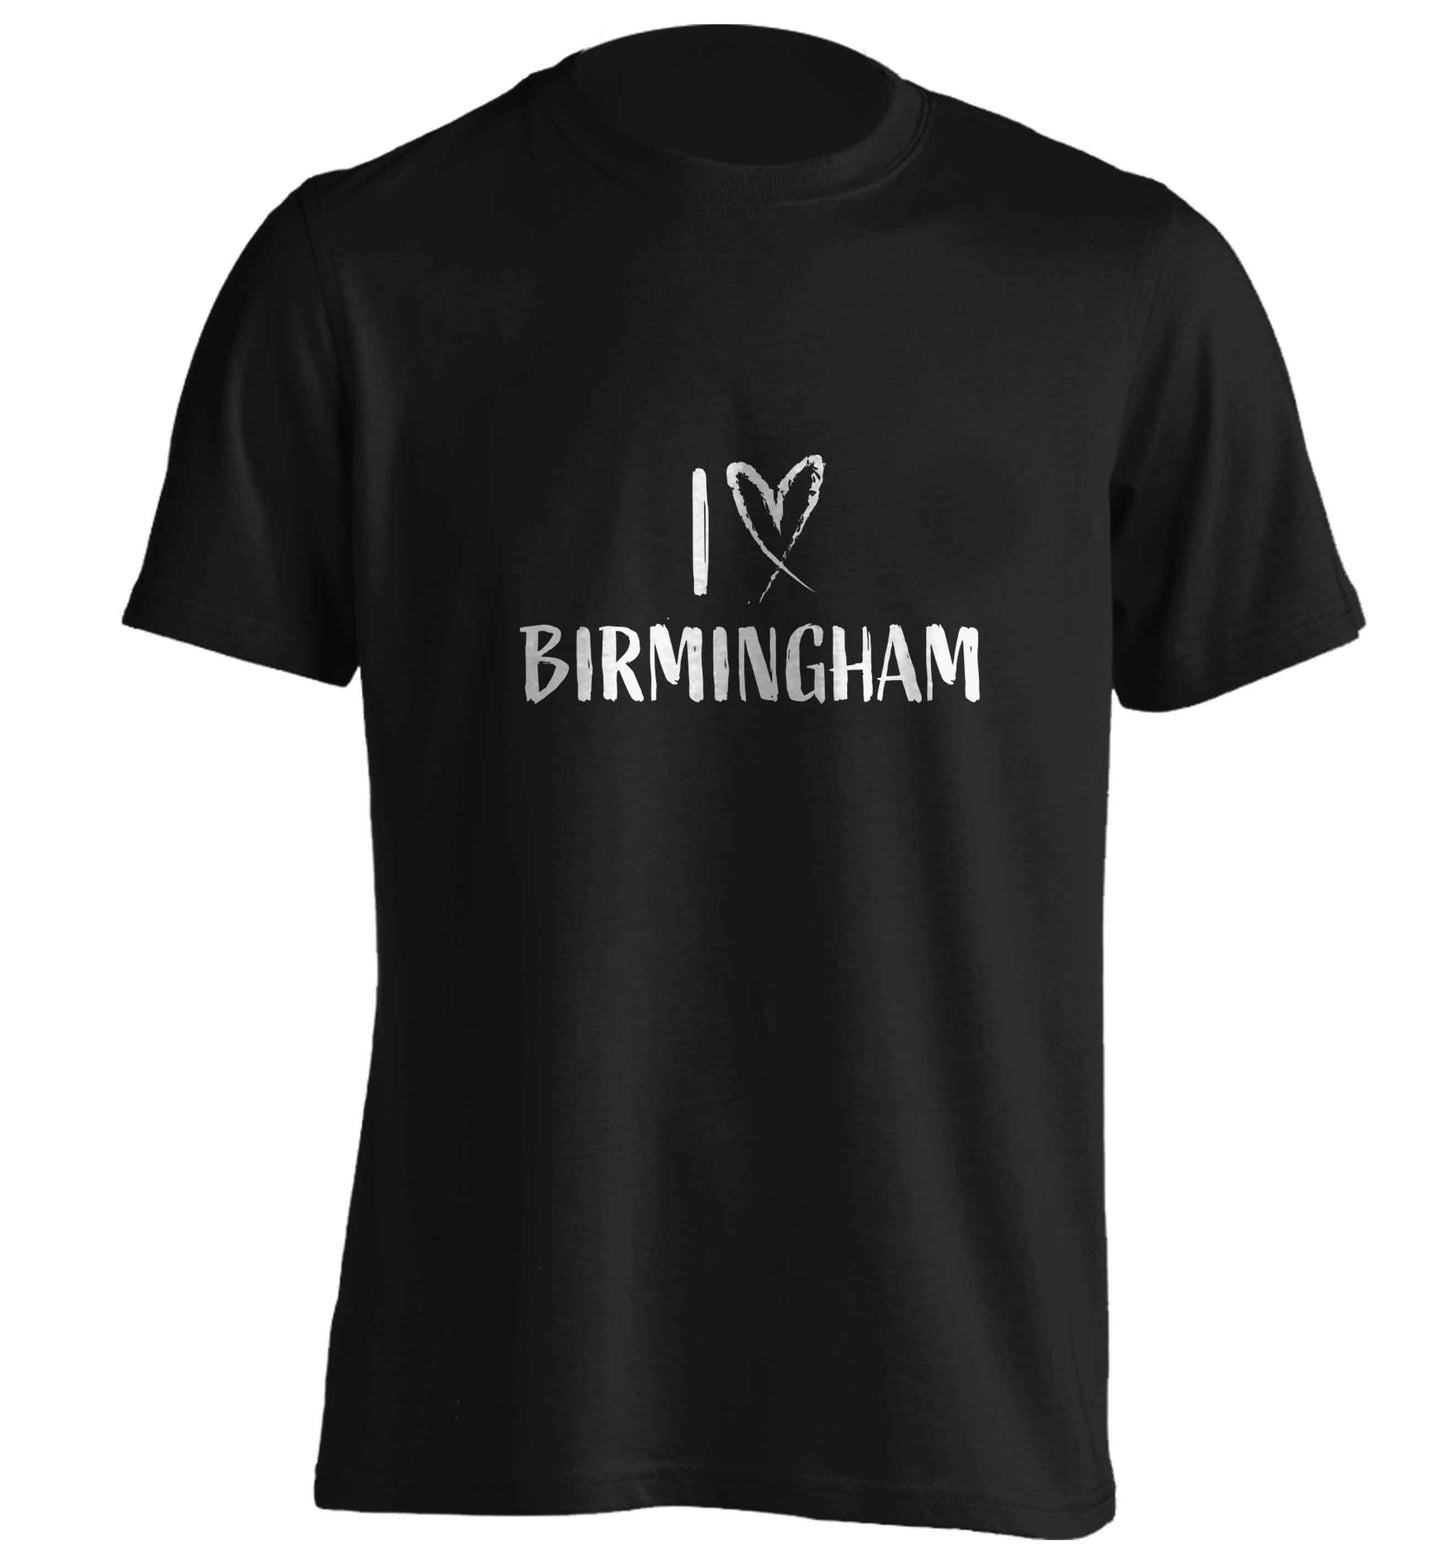 I love Birmingham adults unisex black Tshirt 2XL